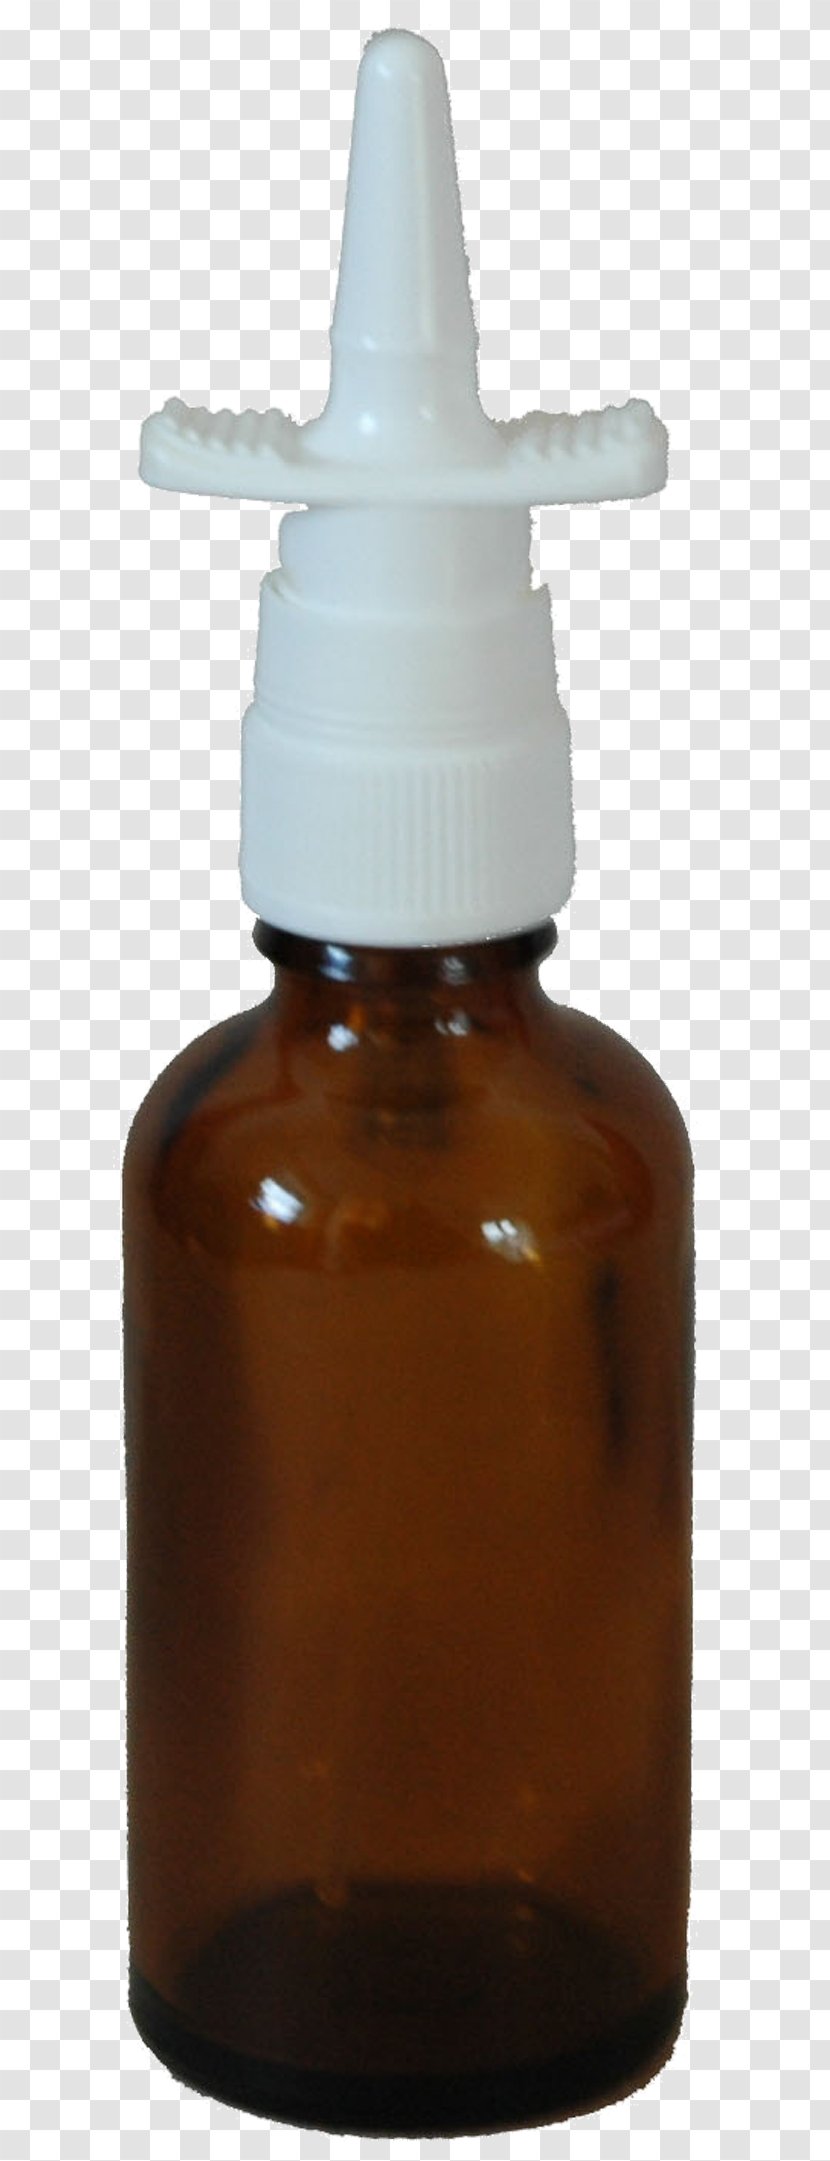 Glass Bottle Caramel Color Brown Liquid Transparent PNG